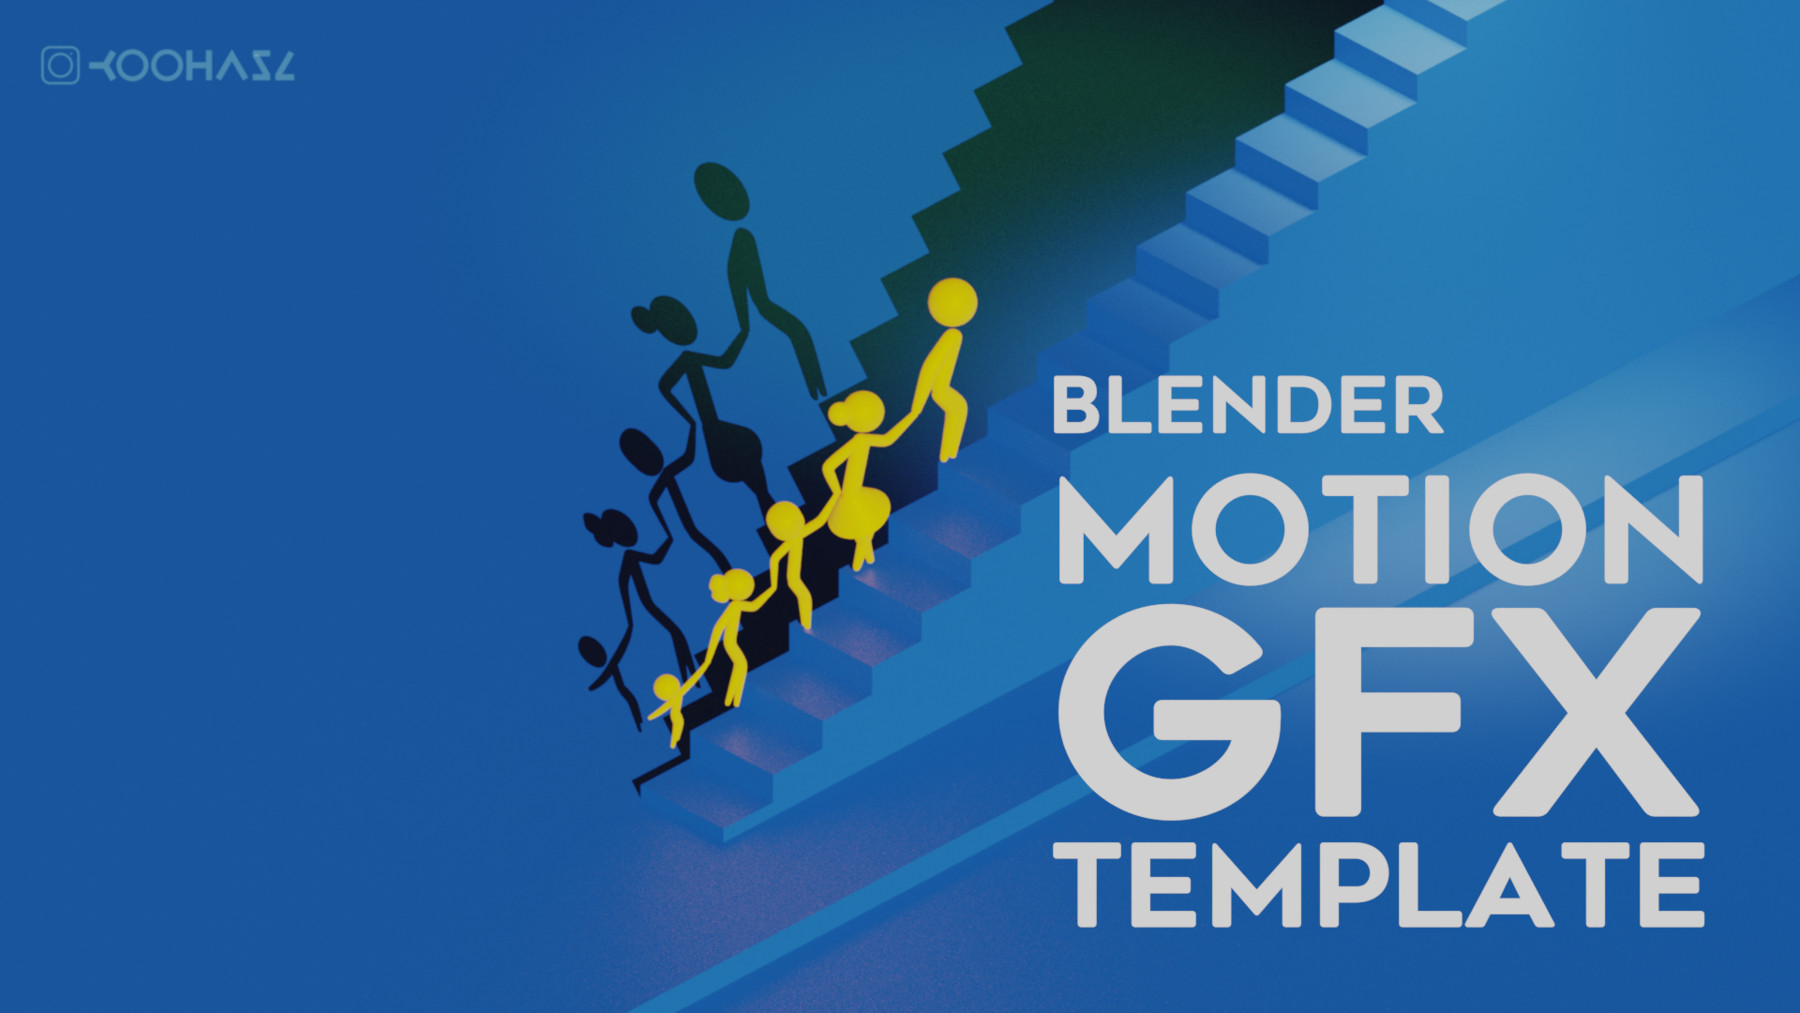 Design animation Portfolio of Yoohasz - Motion Graphics Template (BLENDER  )